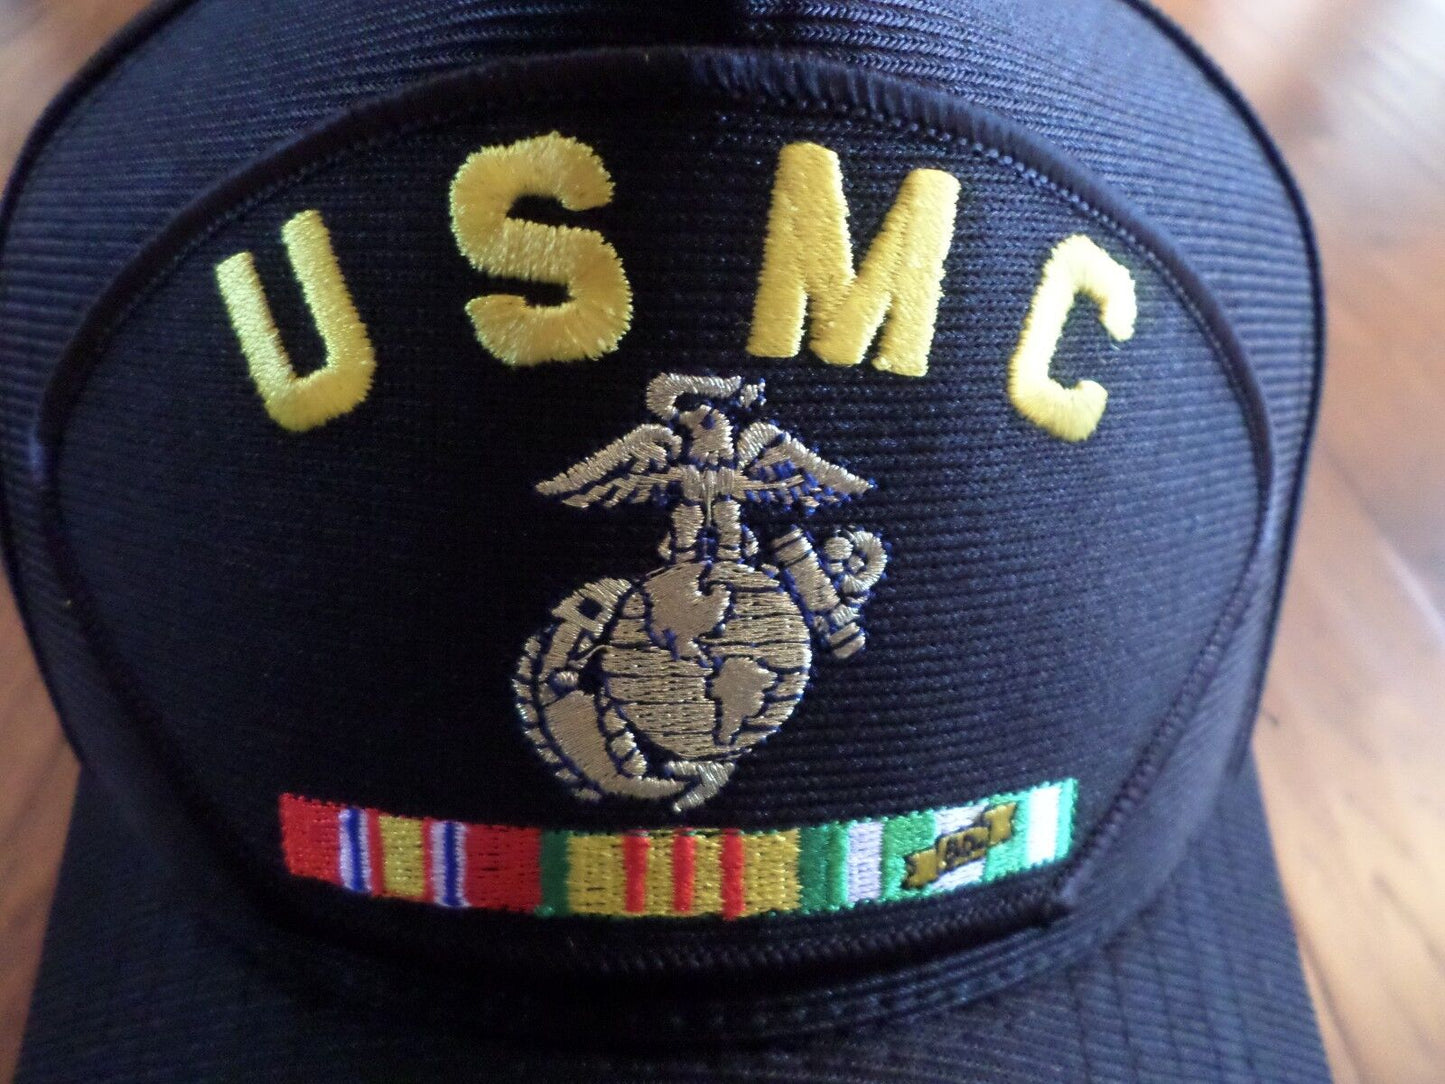 U.S MARINE CORPS VIETNAM VETERAN HAT U.S.M.C OFFICIAL MILITARY BALL CAP U.S MADE